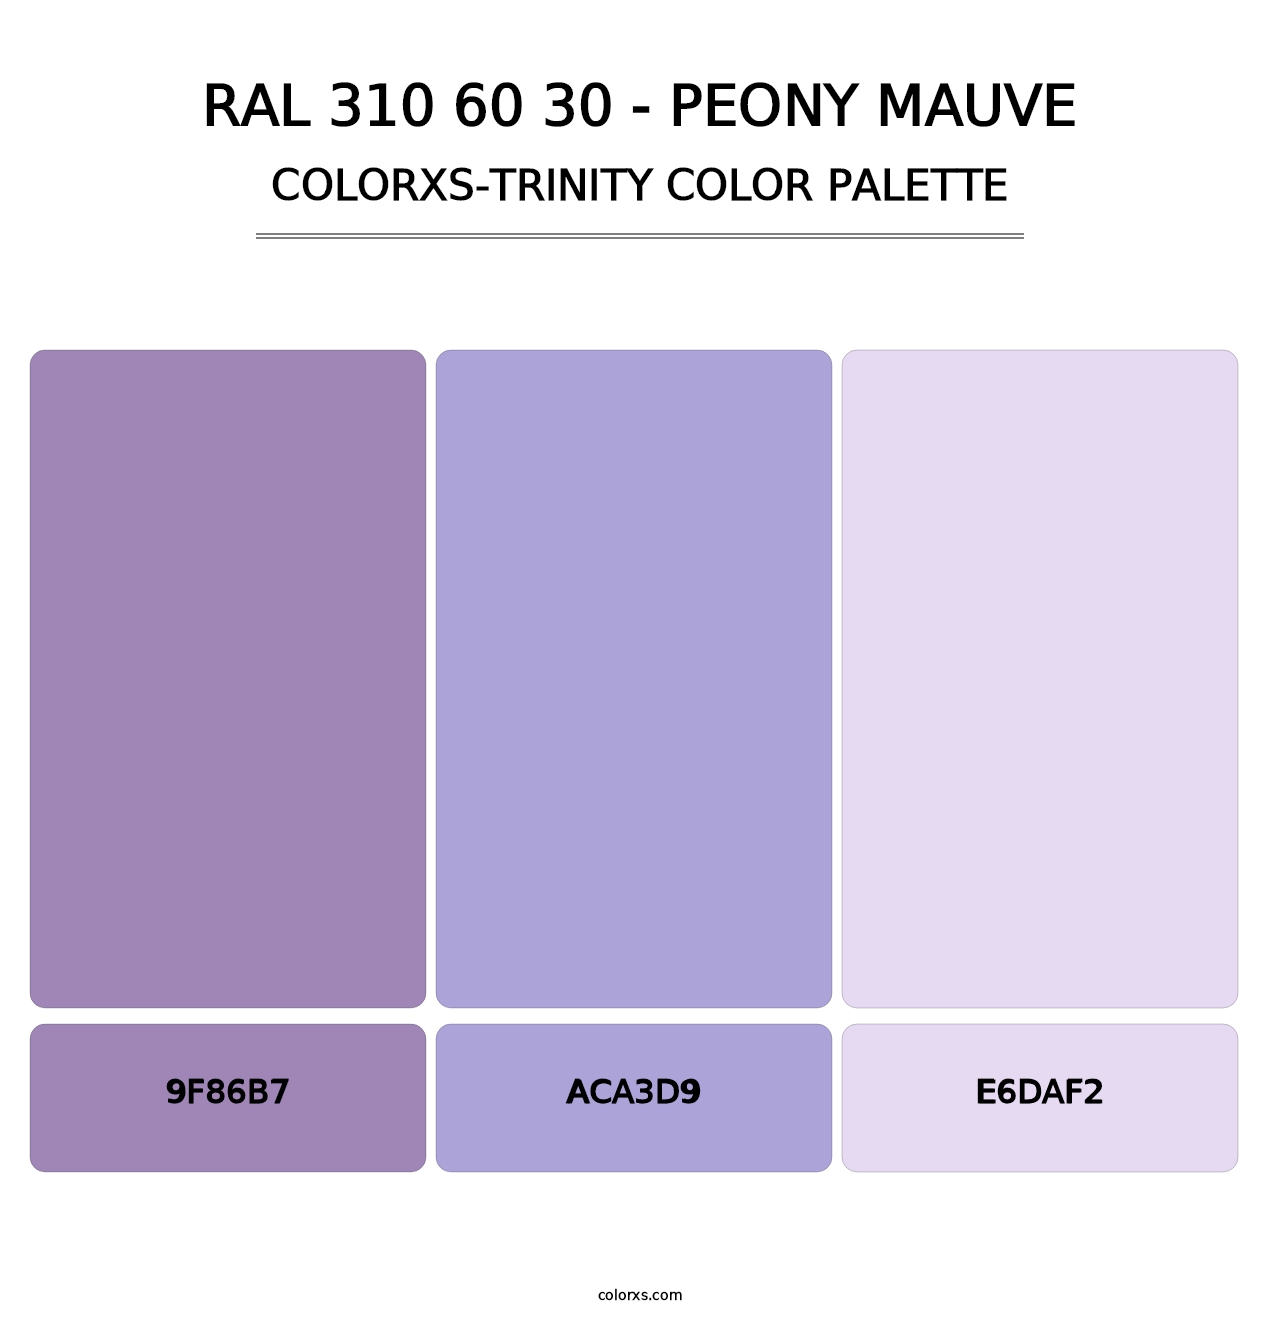 RAL 310 60 30 - Peony Mauve - Colorxs Trinity Palette